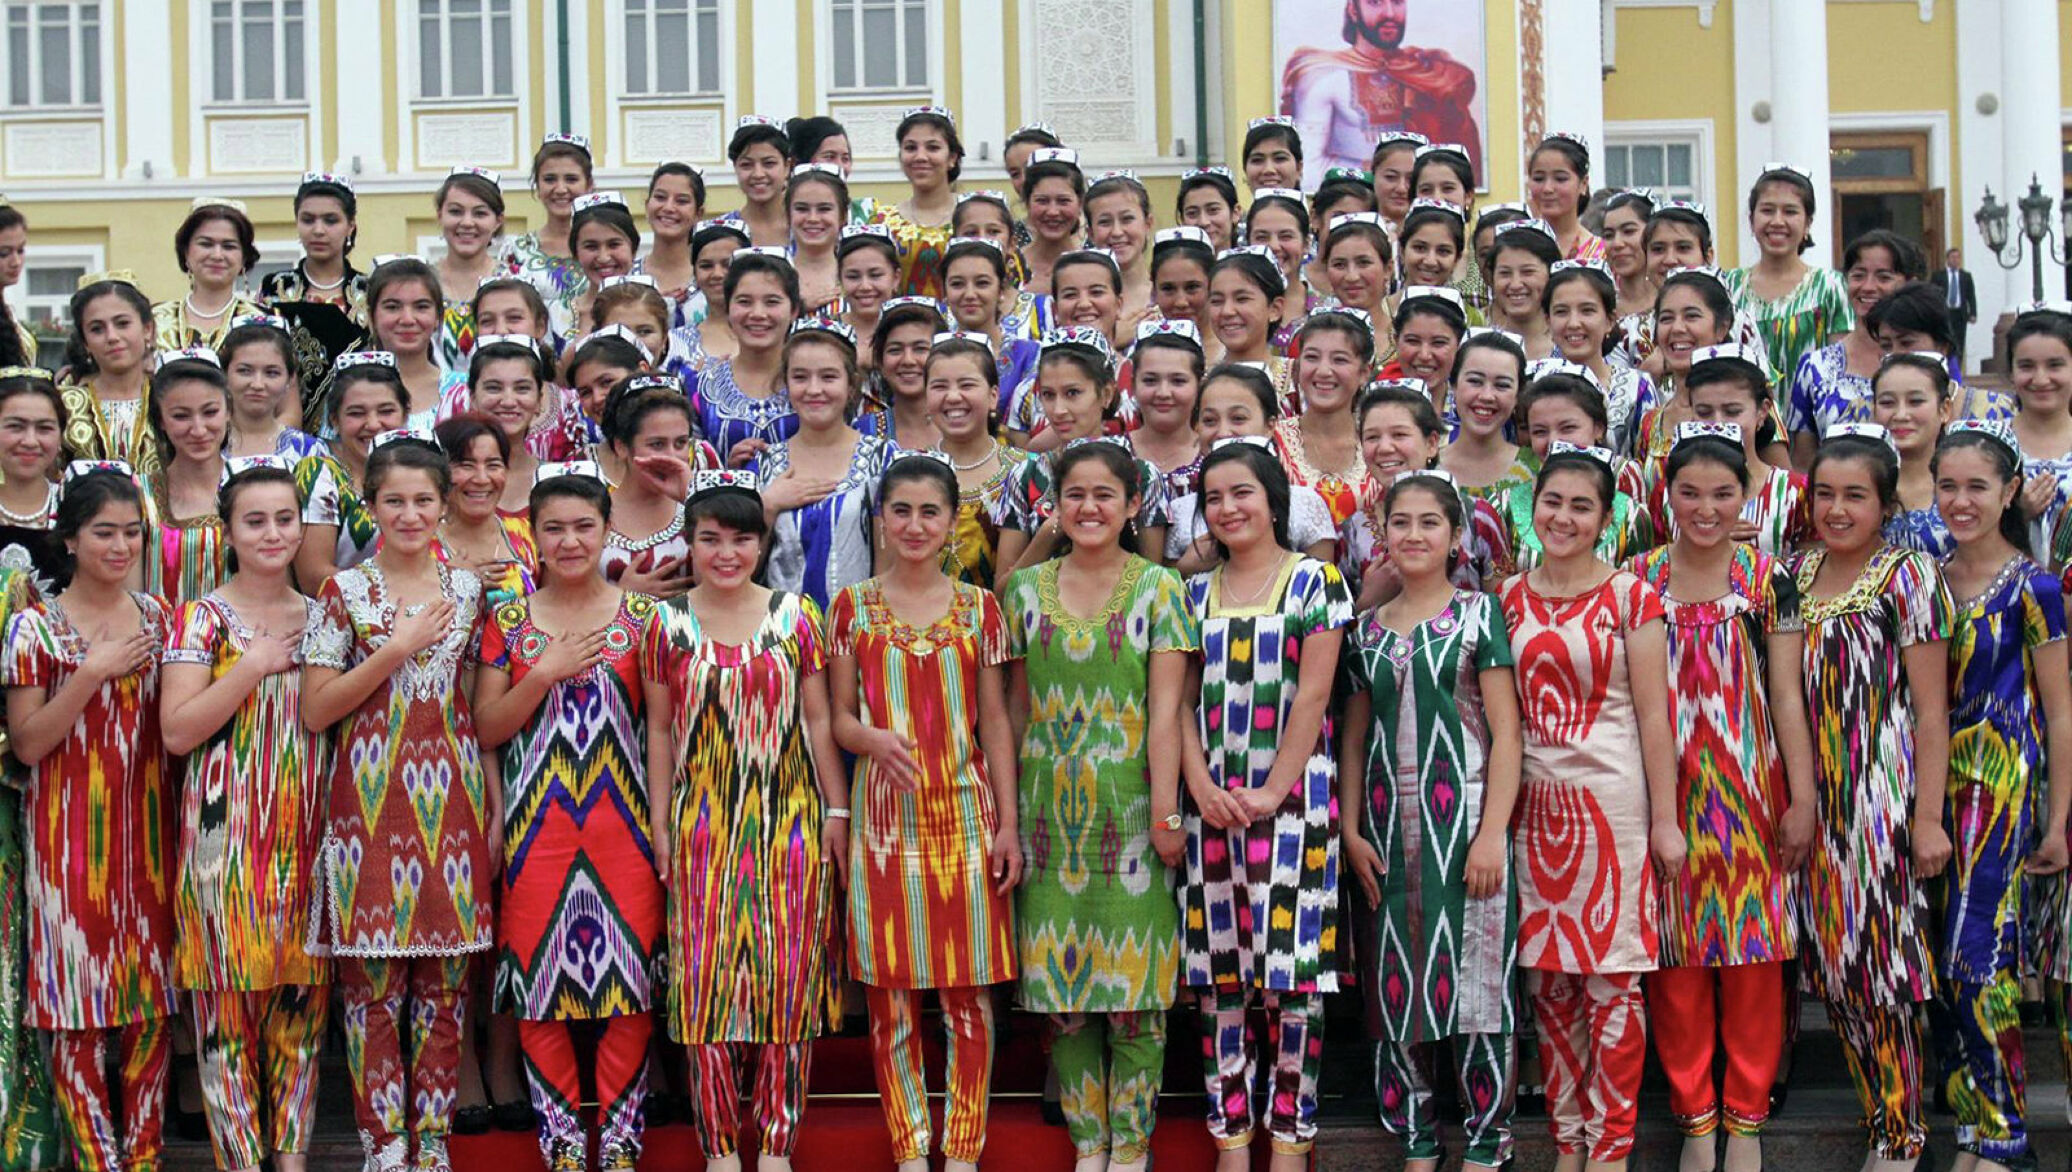 Национальная одежда Таджикистана атлас